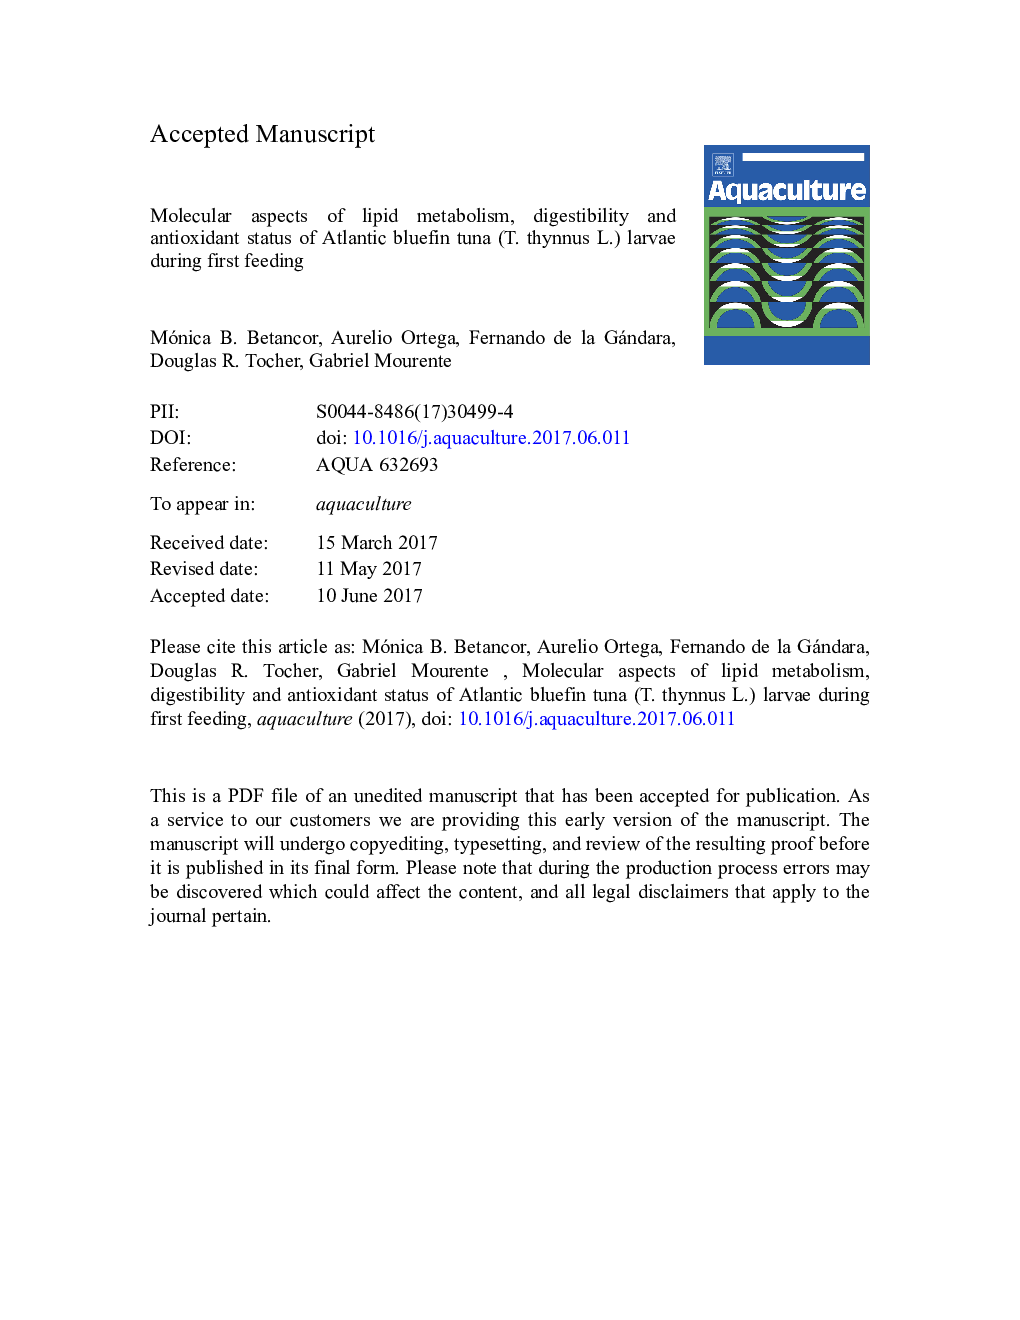 Molecular aspects of lipid metabolism, digestibility and antioxidant status of Atlantic bluefin tuna (T. thynnus L.) larvae during first feeding